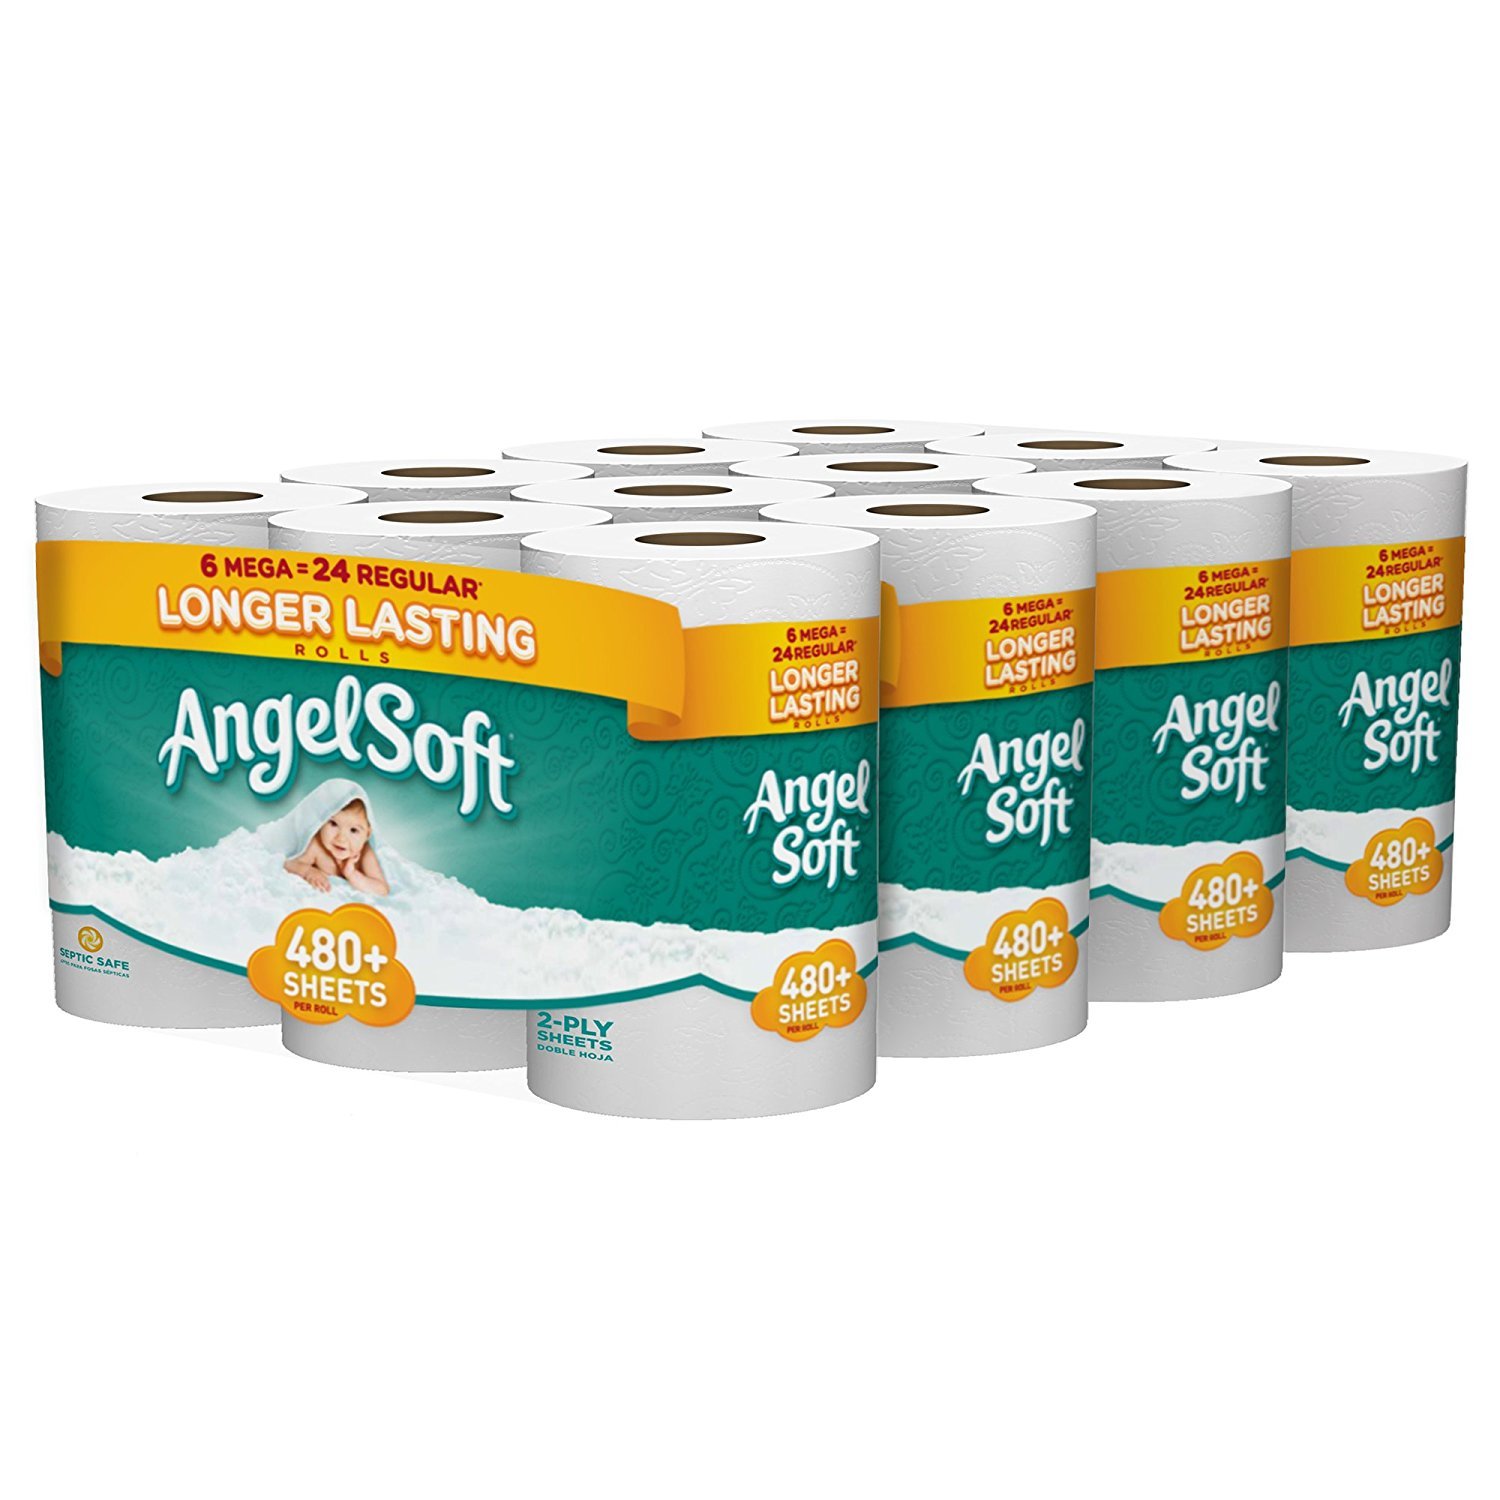 ANGEL SOFT Toilet Paper Bath Tissue, 24 Mega Rolls, 480+ 2-Ply Sheets Per Roll